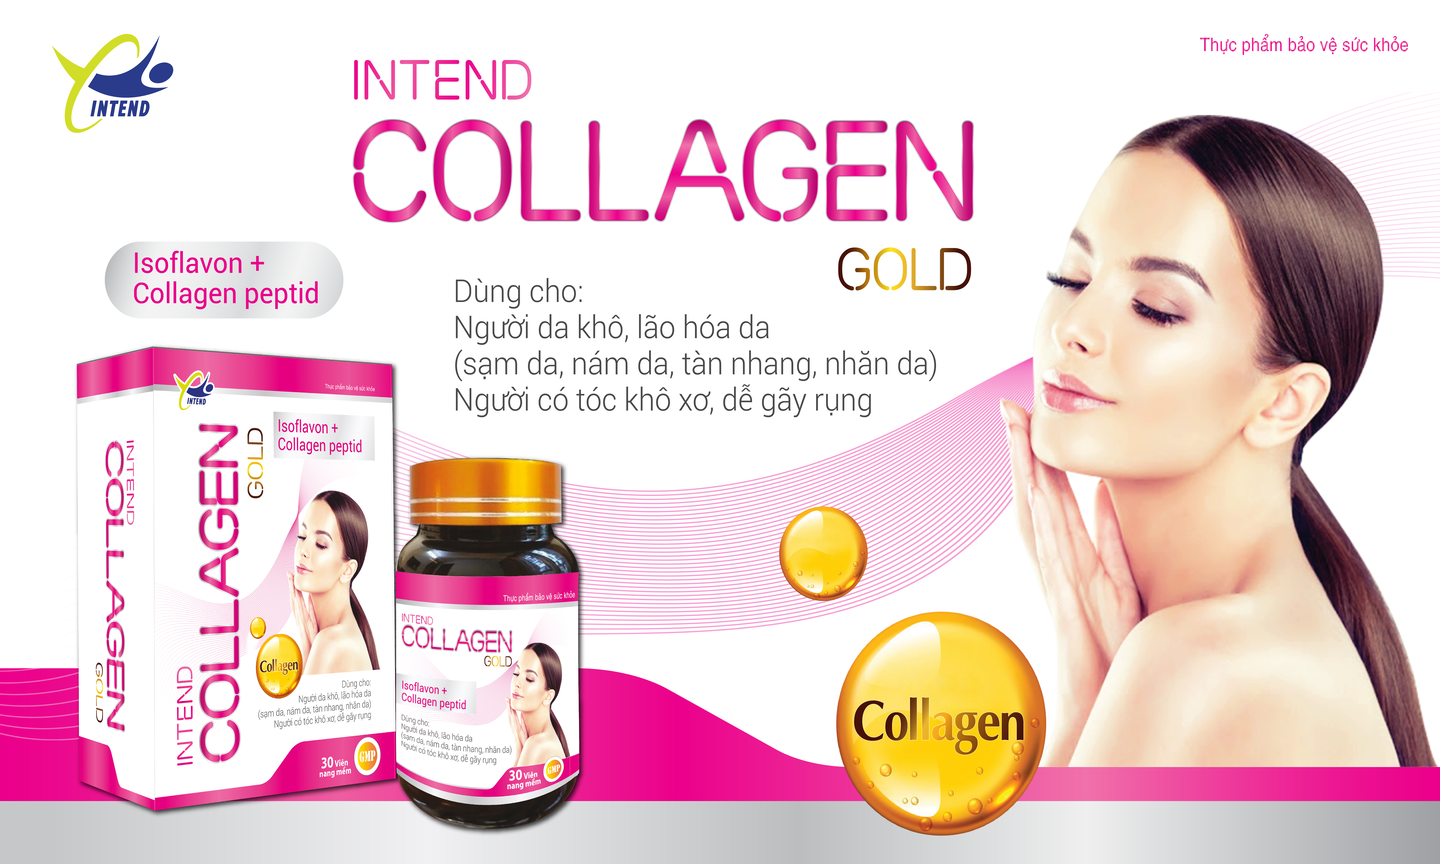 Collagen Gold Intend làm đẹp, trắng da, chống lão hóa